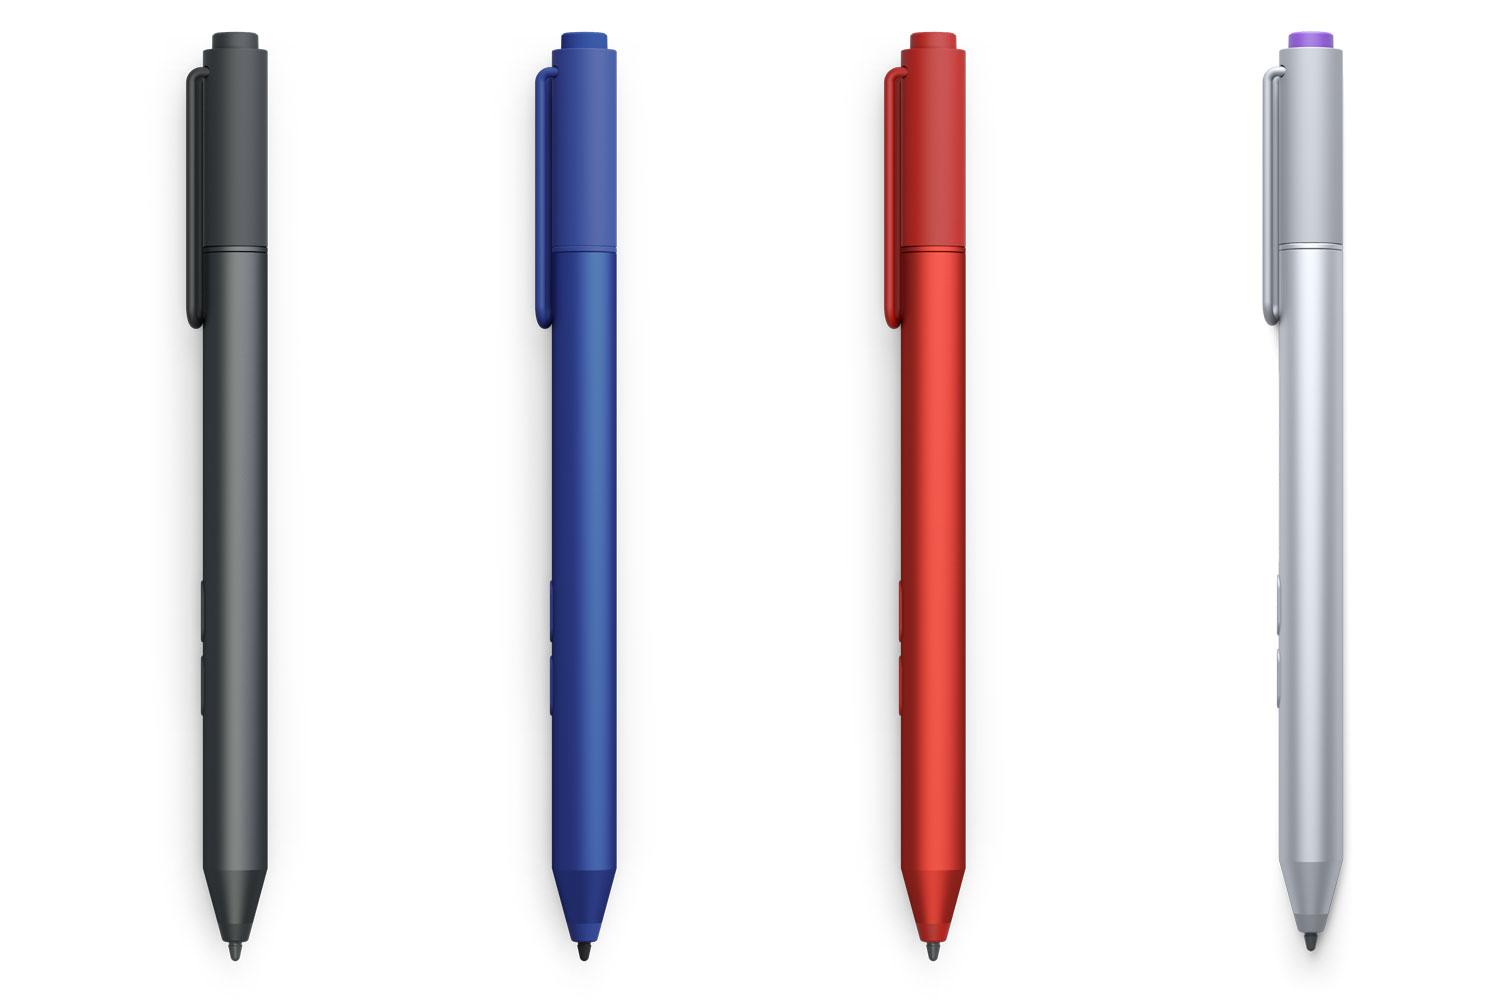 Microsoft Surface 3 pens